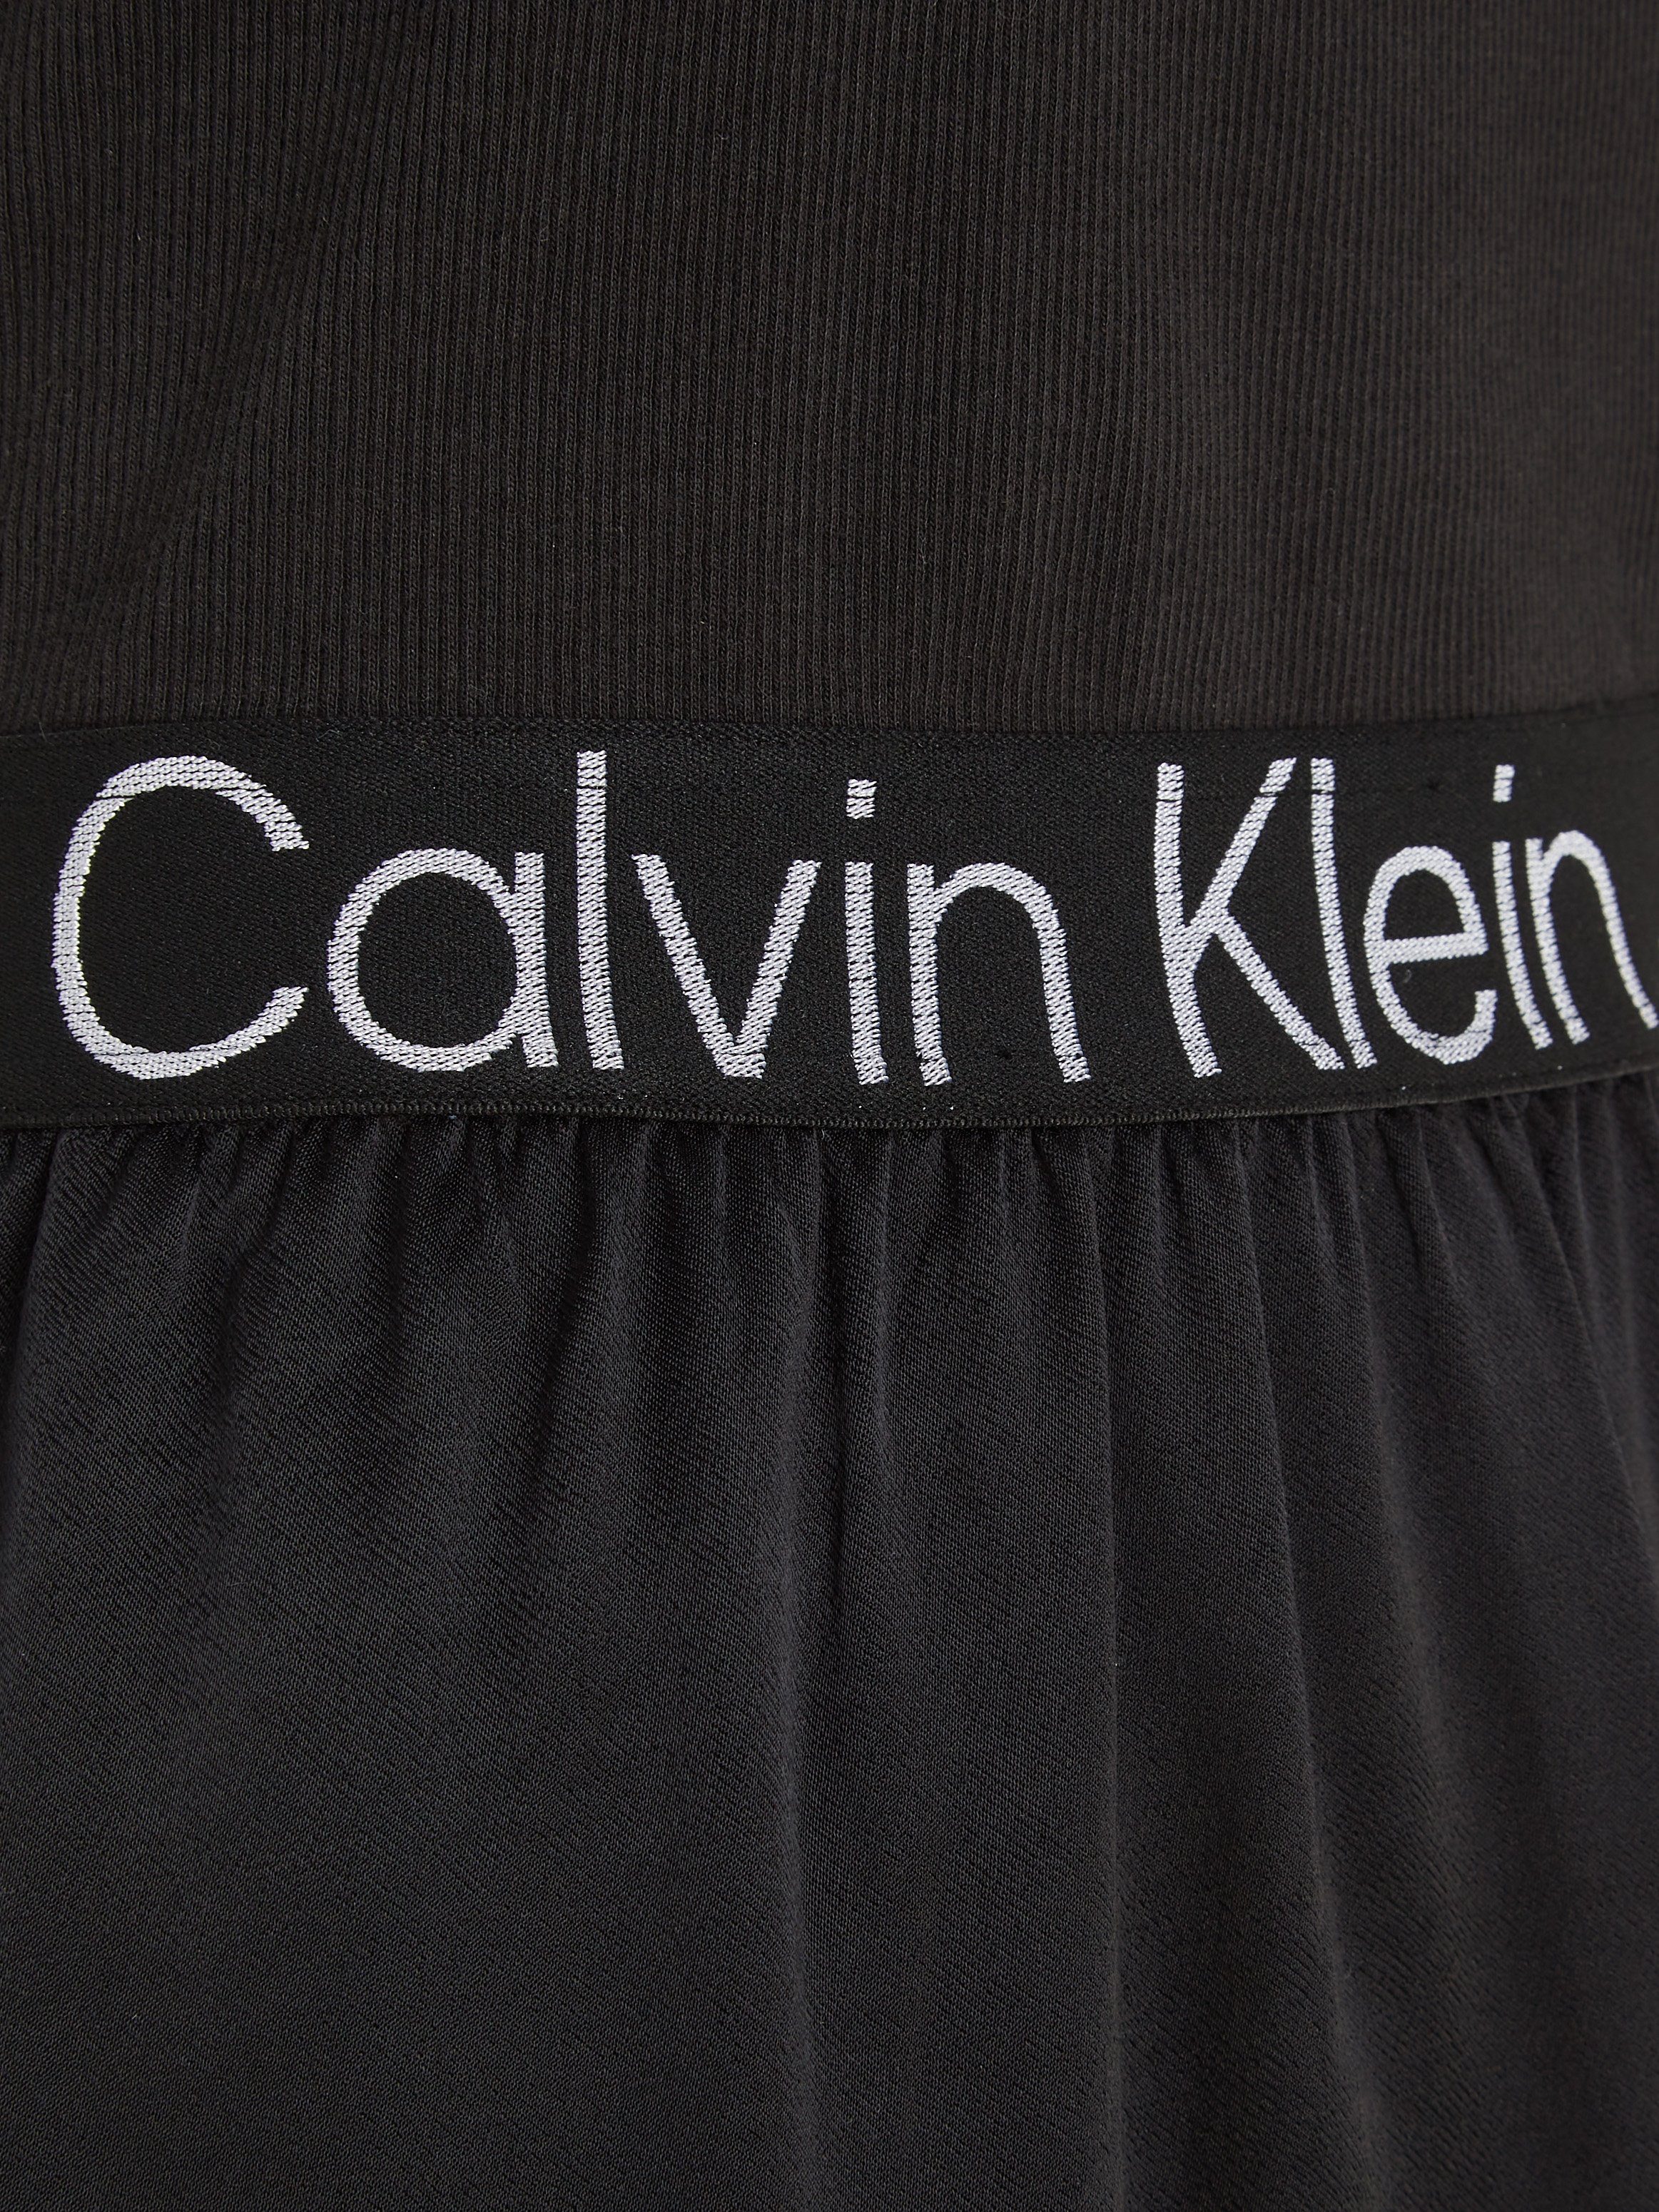 Calvin Klein Jeans Jerseykleid DRESS ELASTIC RACERBACK LOGO